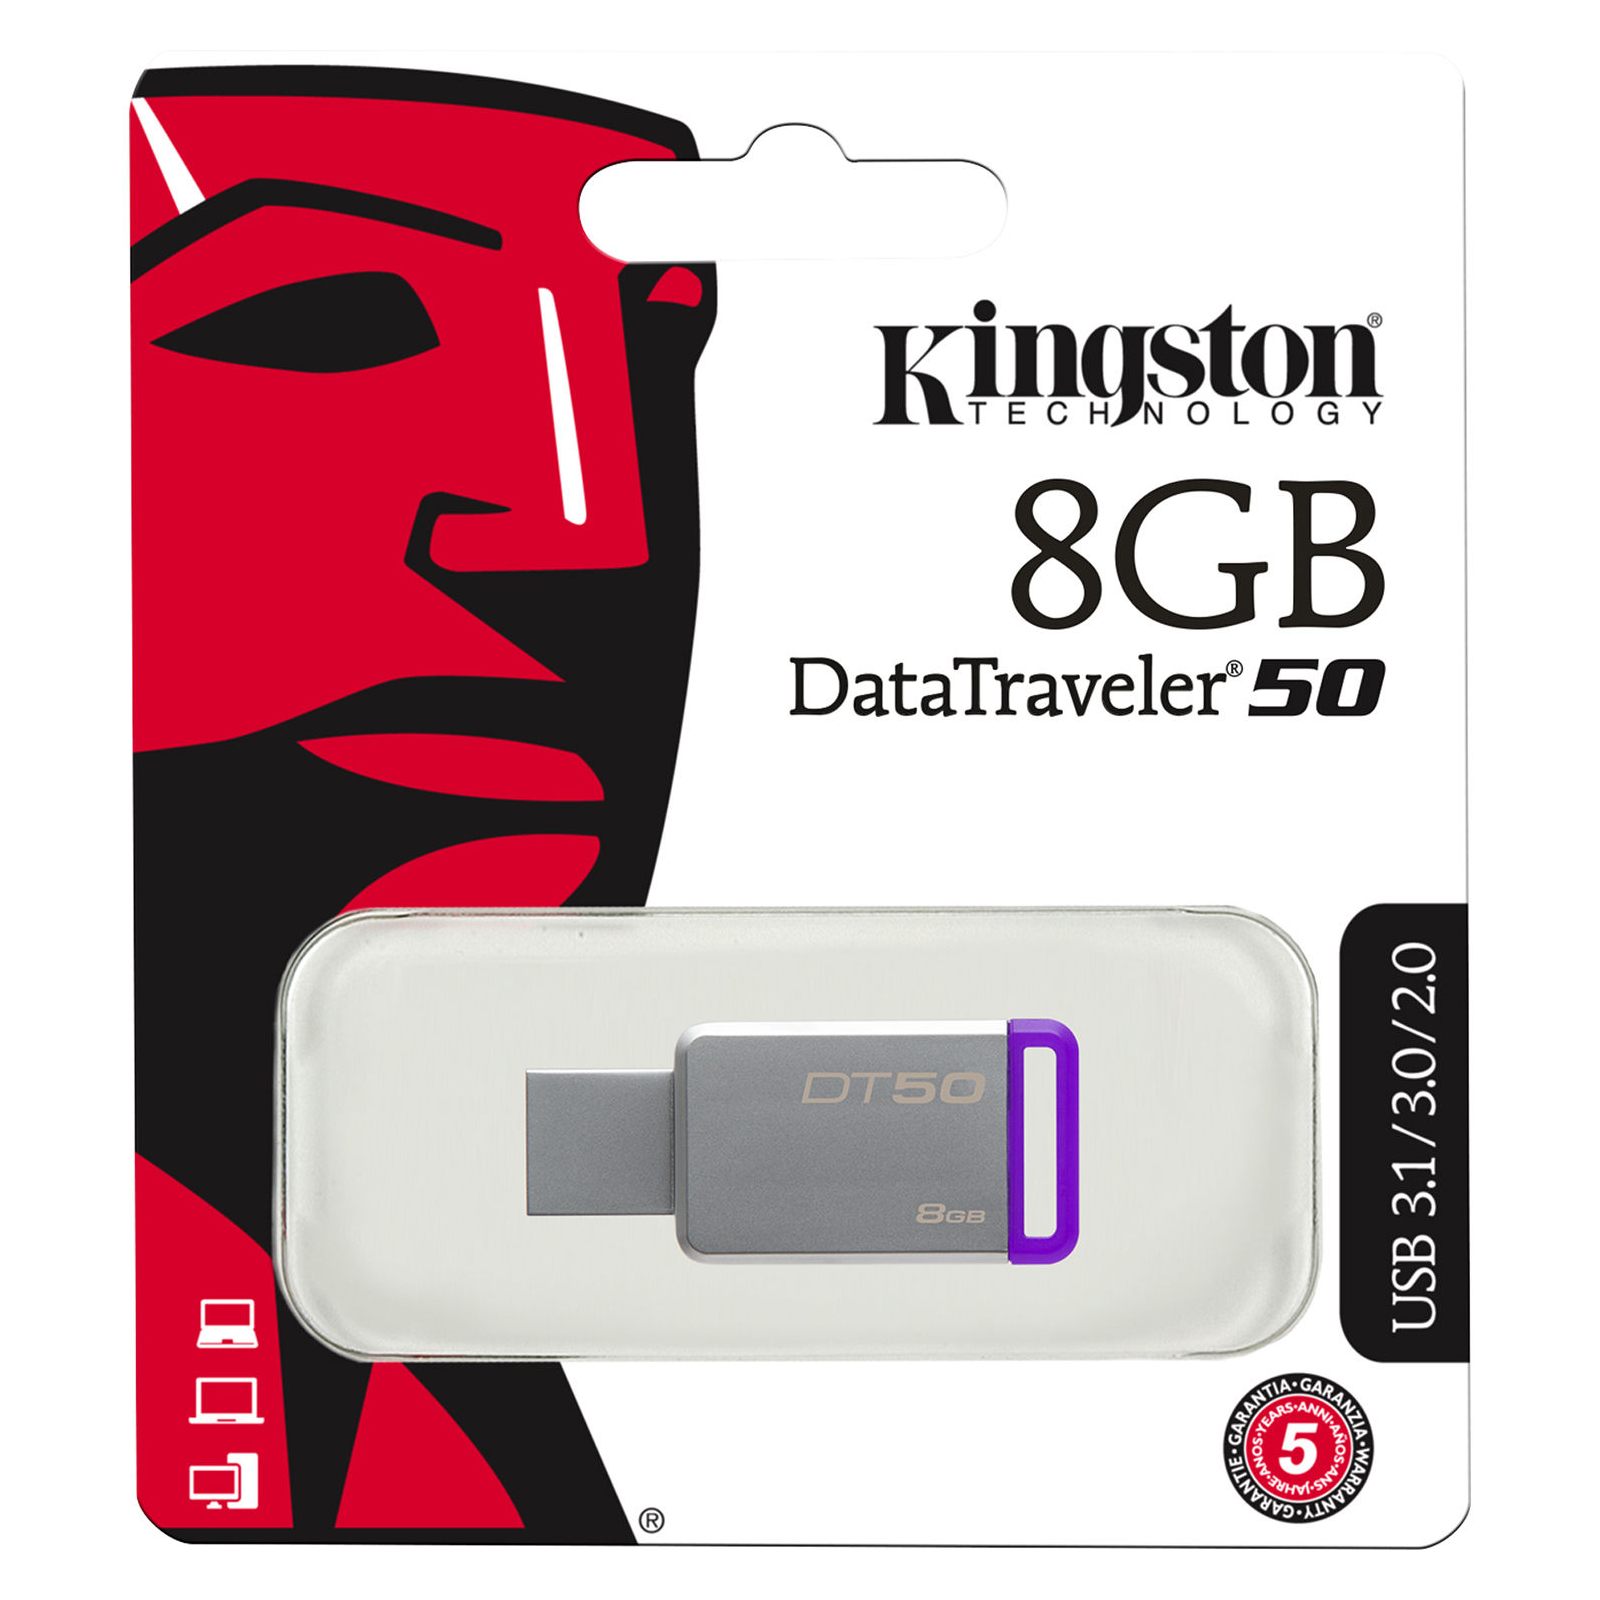 USB флеш накопитель Kingston 32GB DT50 USB 3.1 (DT50/32GB) изображение 4